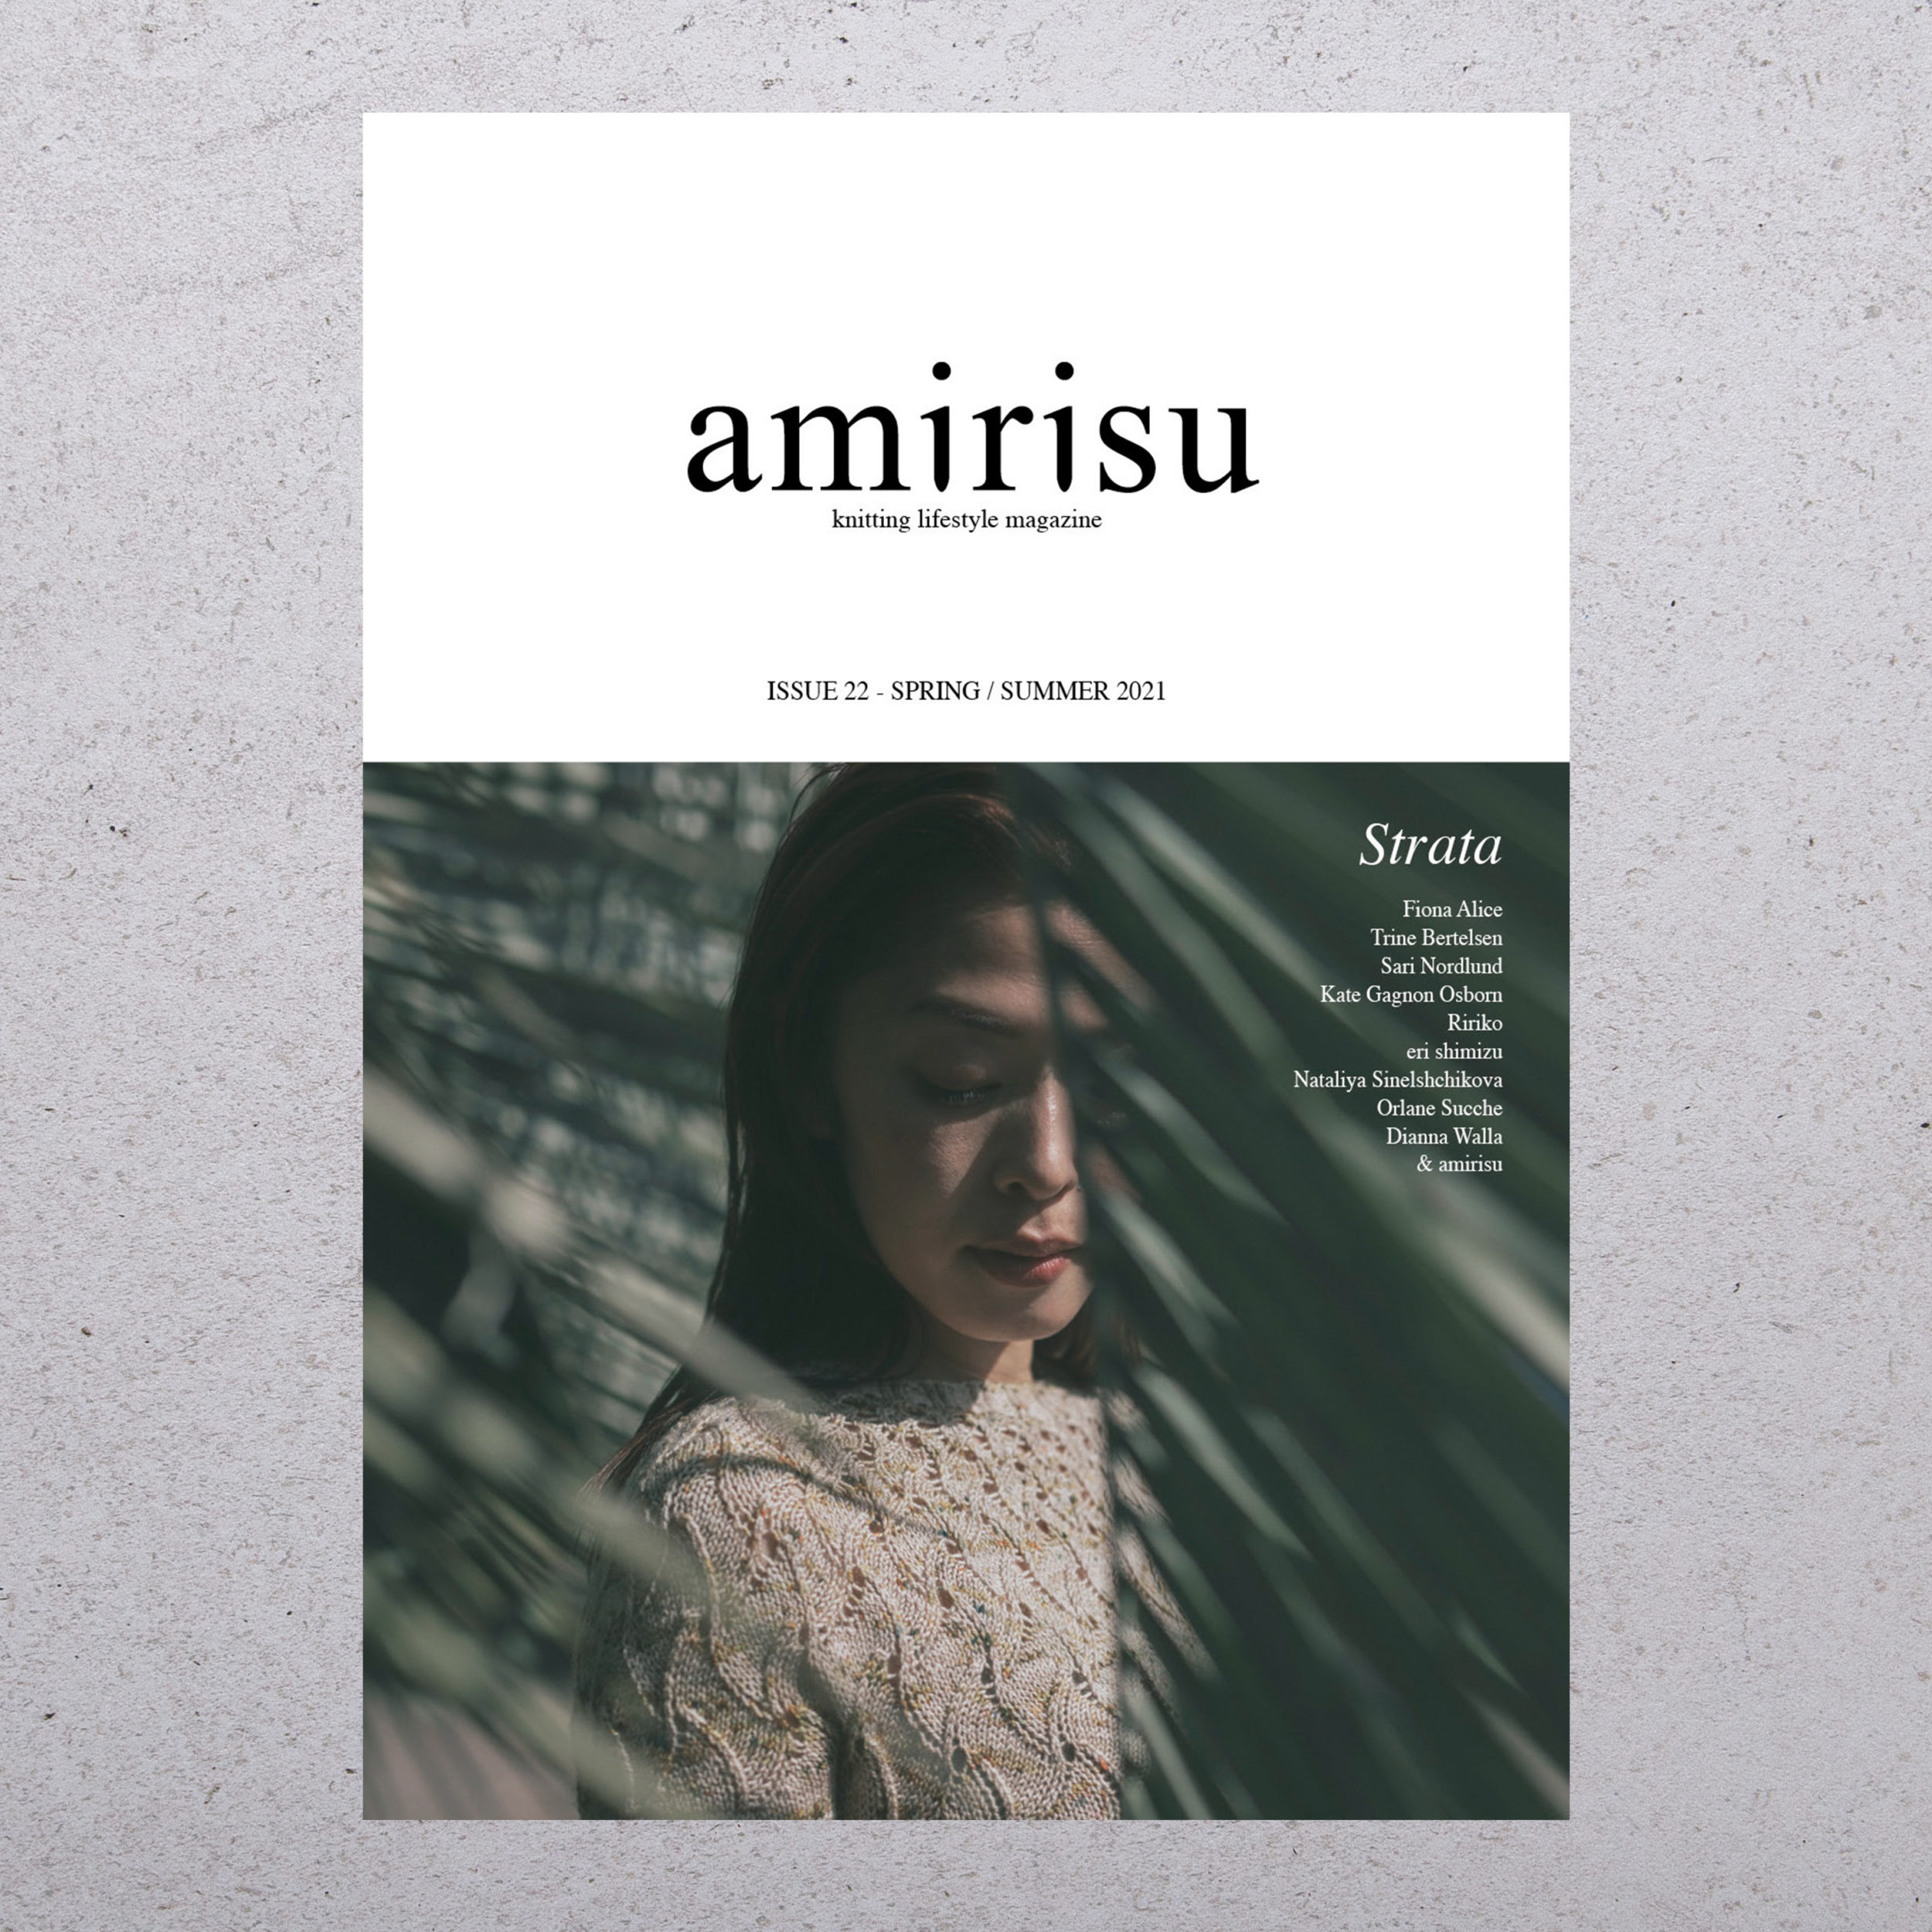 AMIRISU ISSUE 22 - AMIRISU